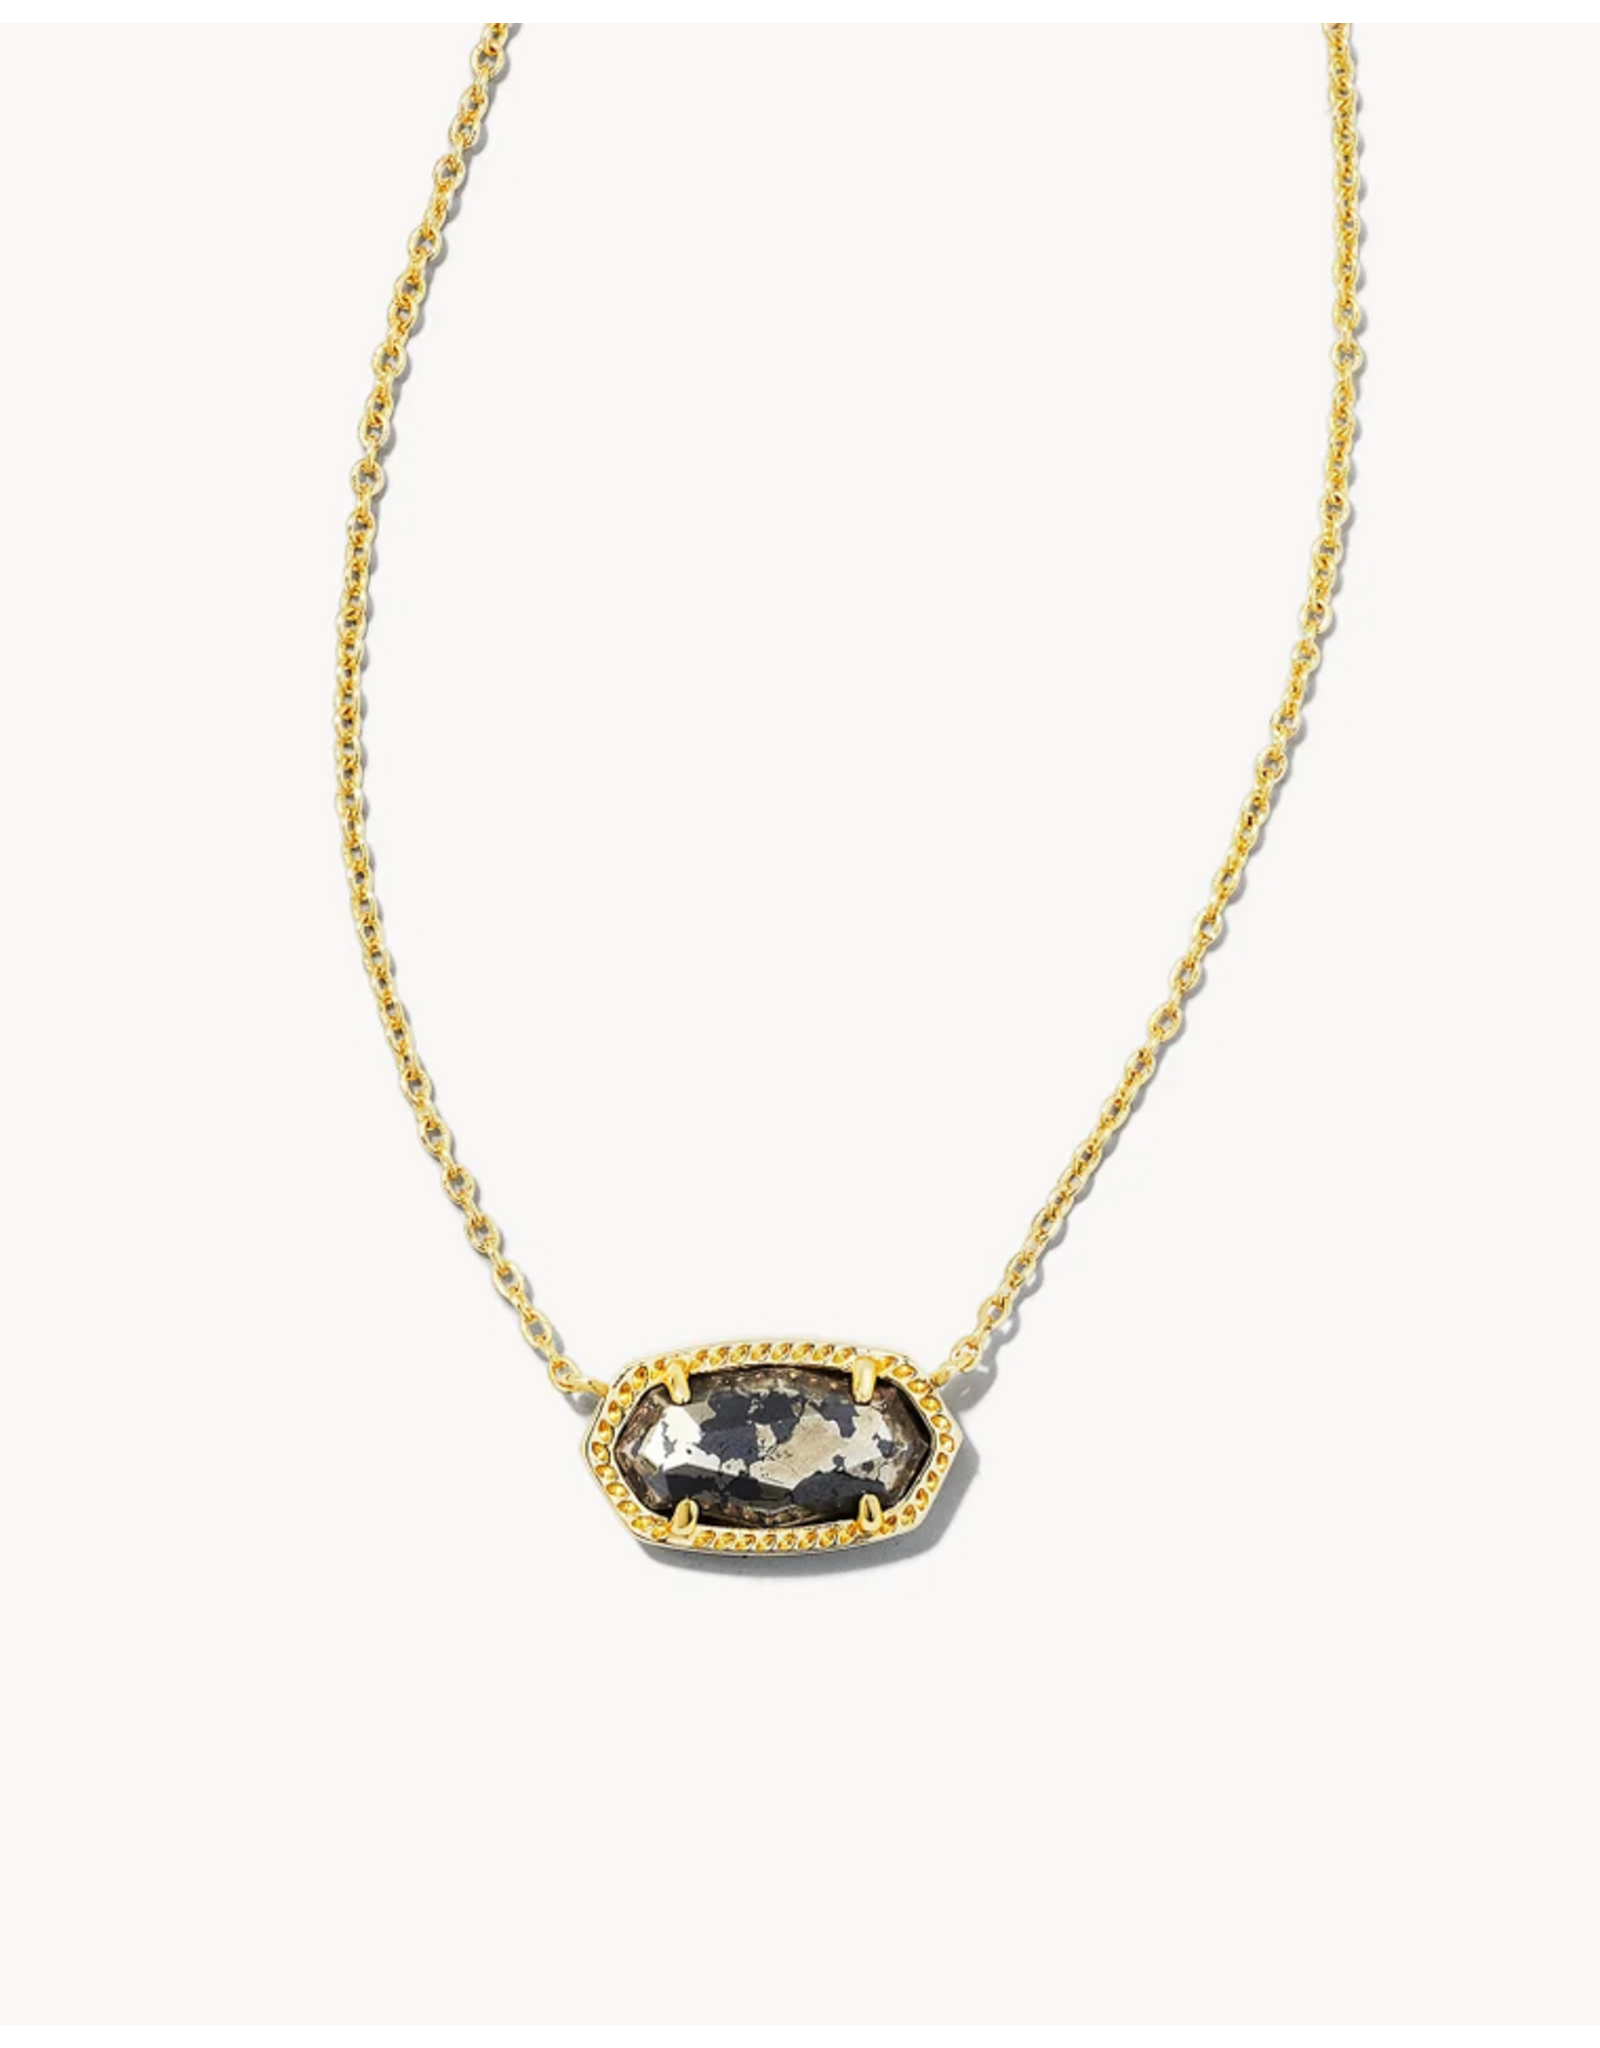 Kendra Scott Pave Heart Padlock 14k Yellow Gold Pendant Necklace in White  Diamond | The Summit at Fritz Farm